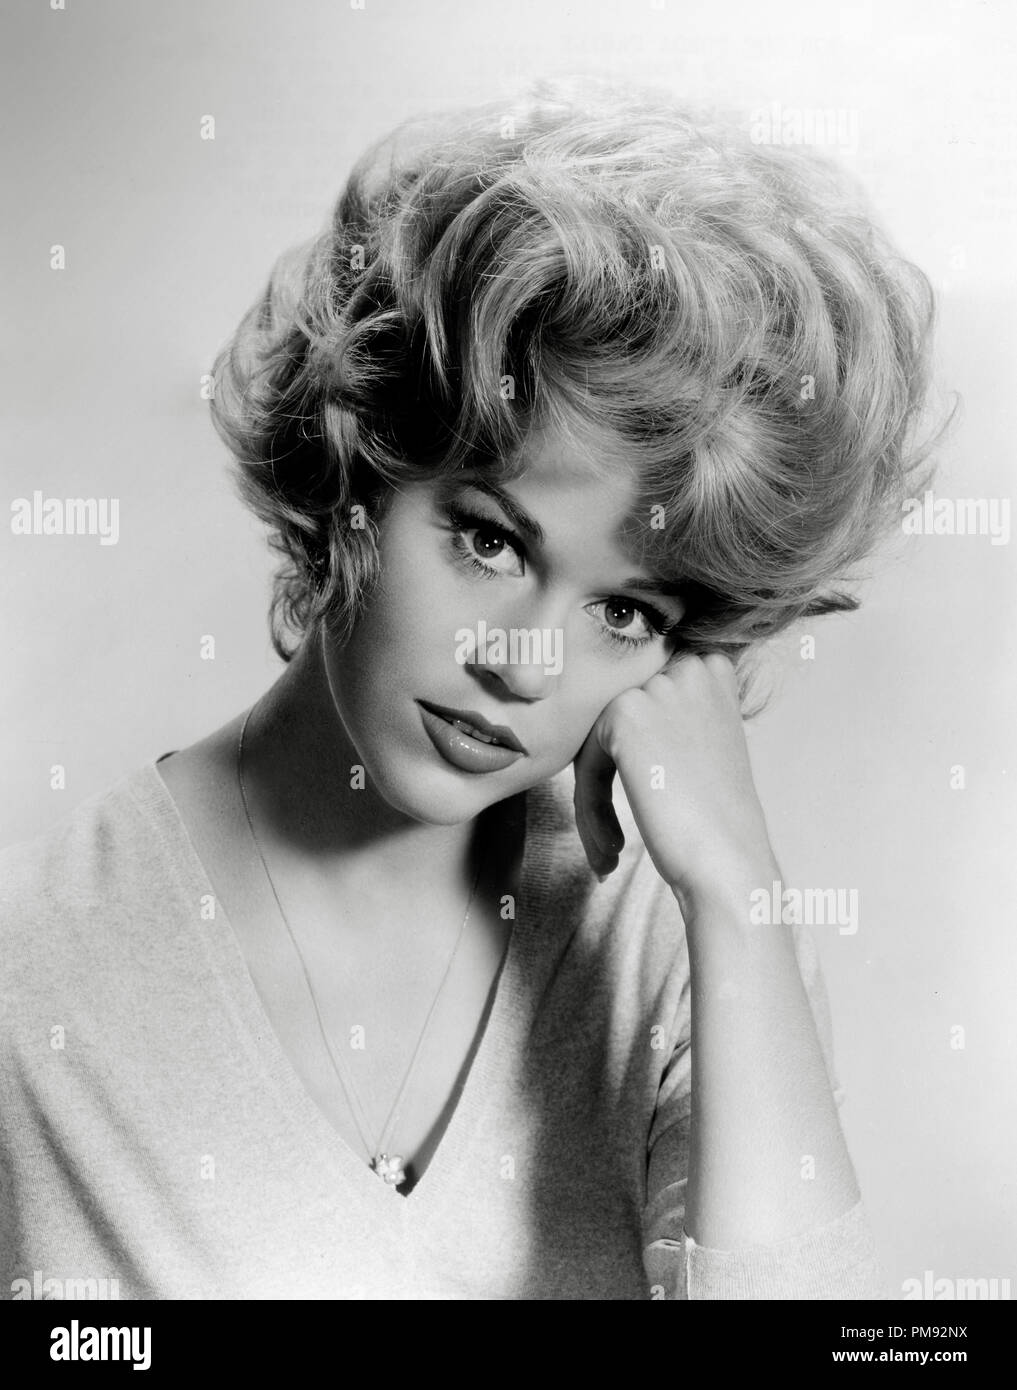 (Archivística Cine Clásico - Jane Fonda retrospectiva) Jane Fonda, circa 1961. Archivo de referencia # 31537 282tha Foto de stock